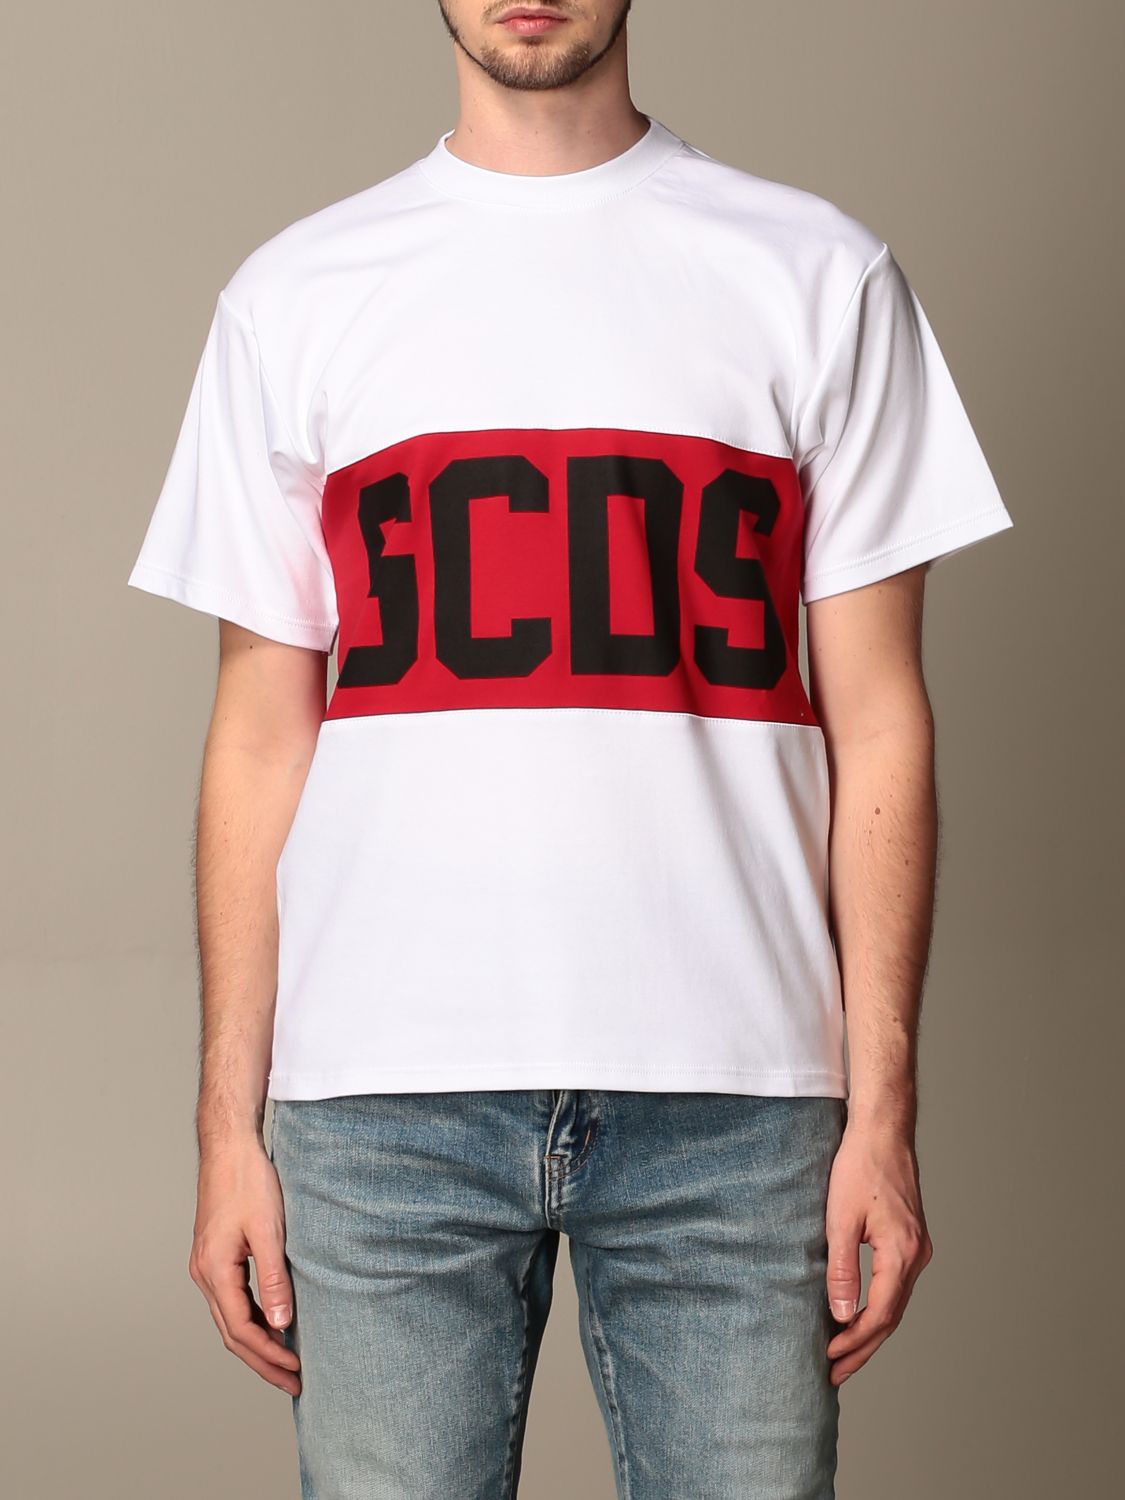 Gcds Outlet: t-shirt for men - White | Gcds t-shirt CC94M021014 online ...